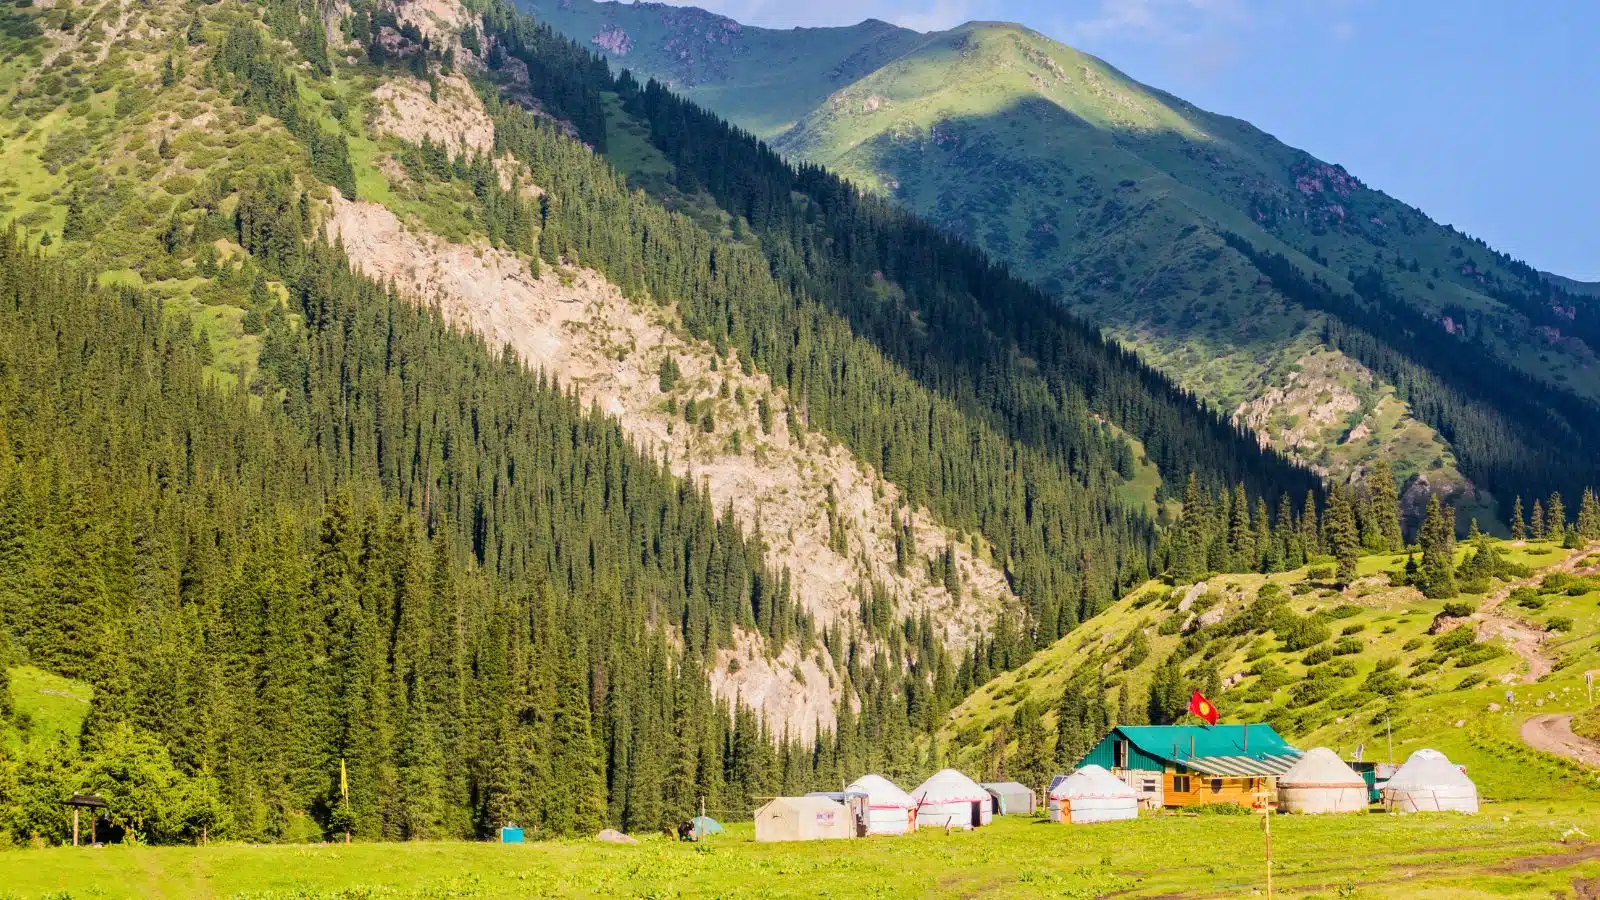 Yurt camp in Kyrgyzstan